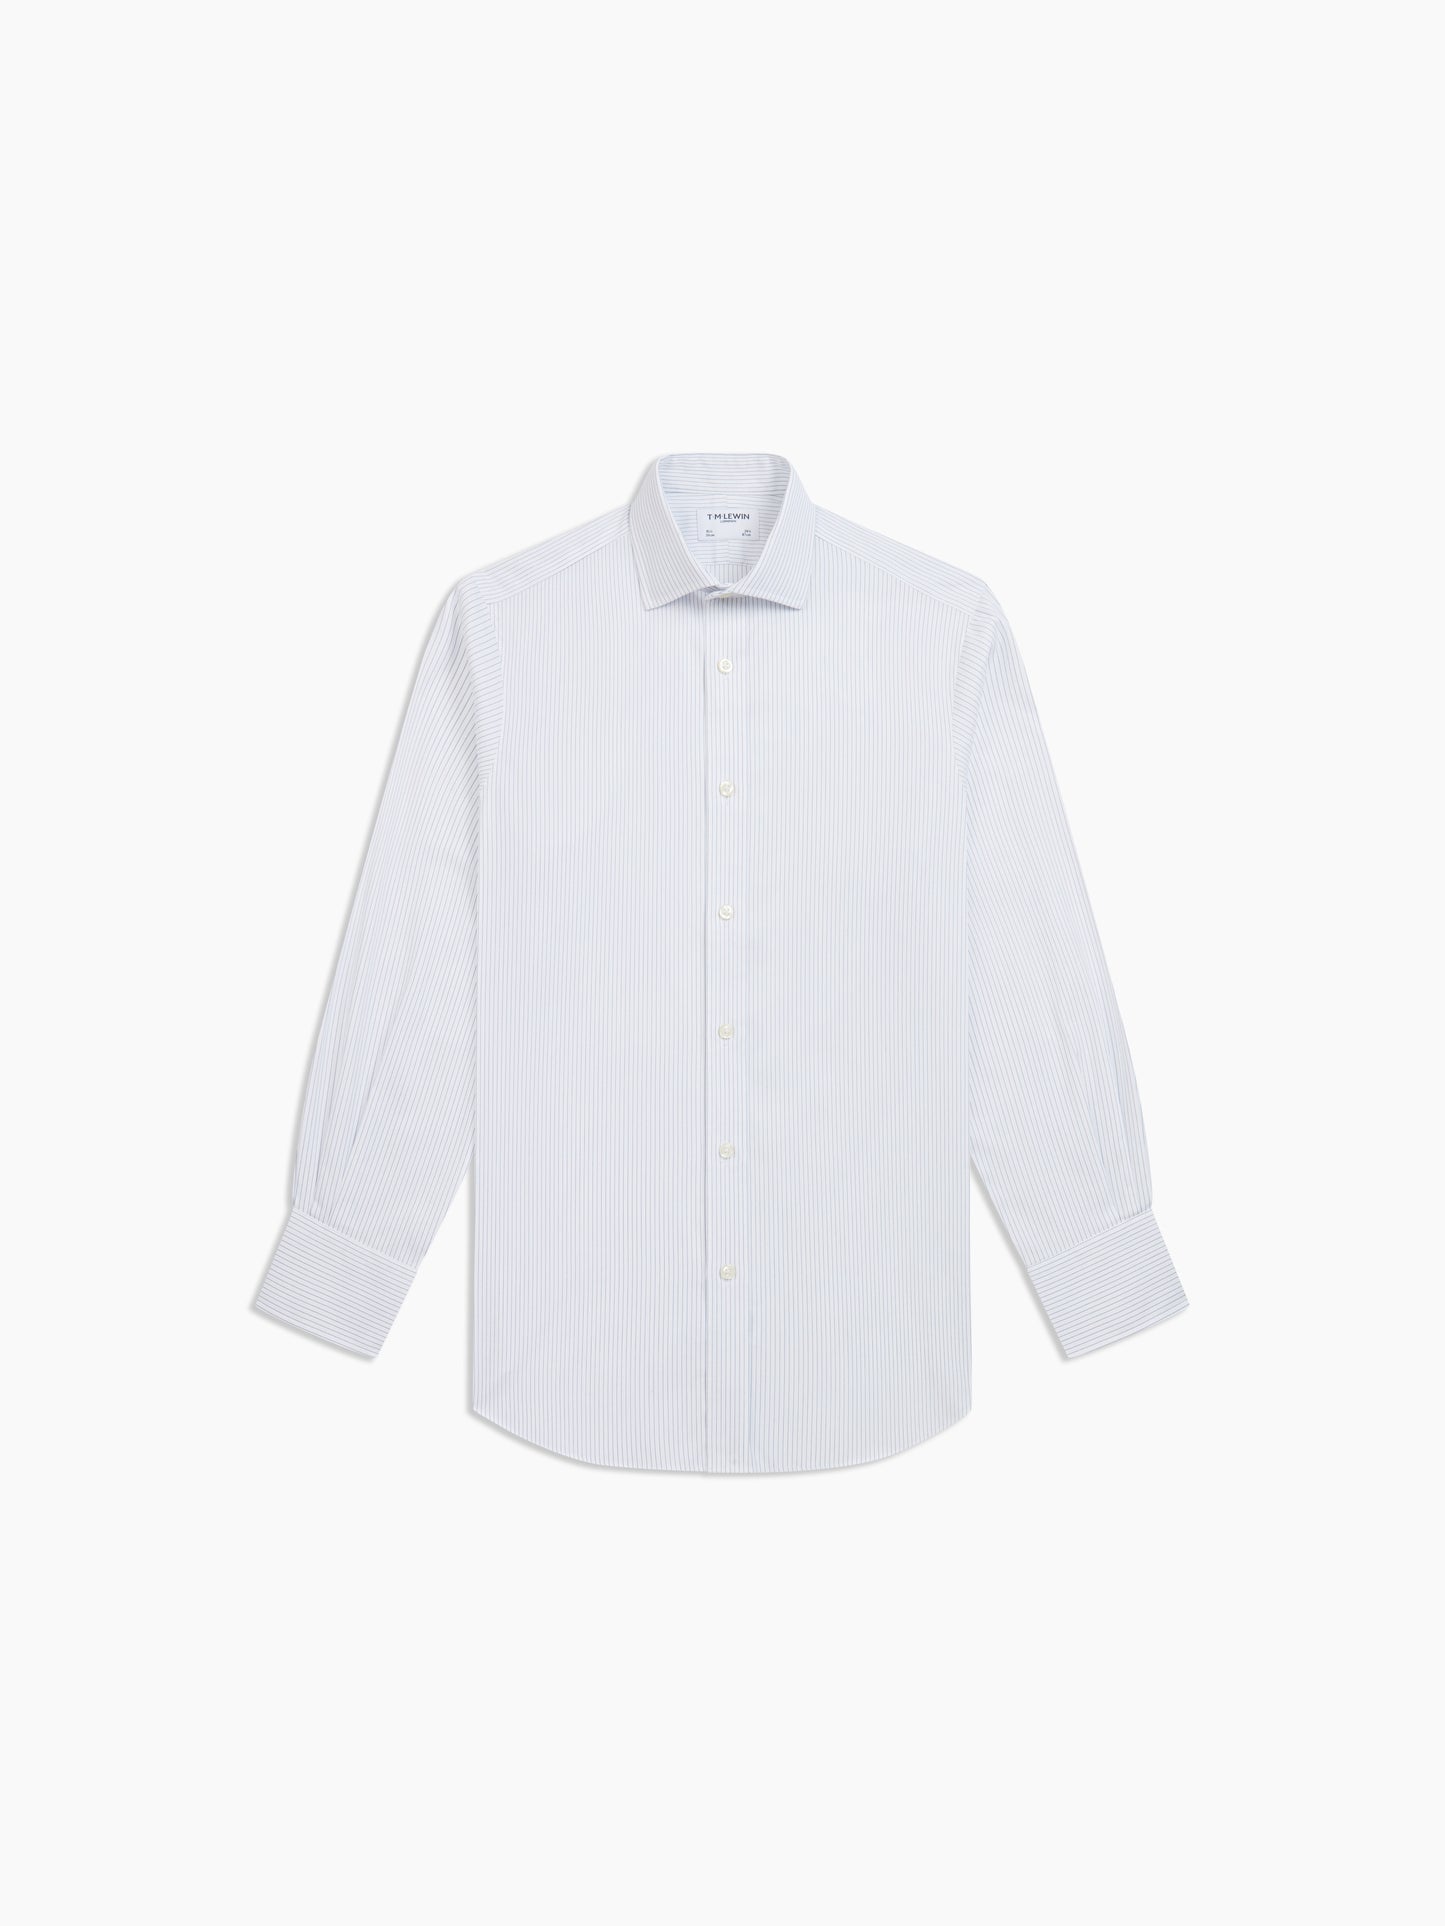 Image 2 of Non-Iron Navy Blue Dash Stripe Plain Weave Slim Fit Single Cuff Semi Cutaway Collar Shirt